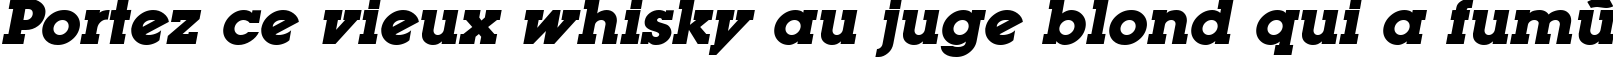 Пример написания шрифтом LugaAd Bold Oblique текста на французском